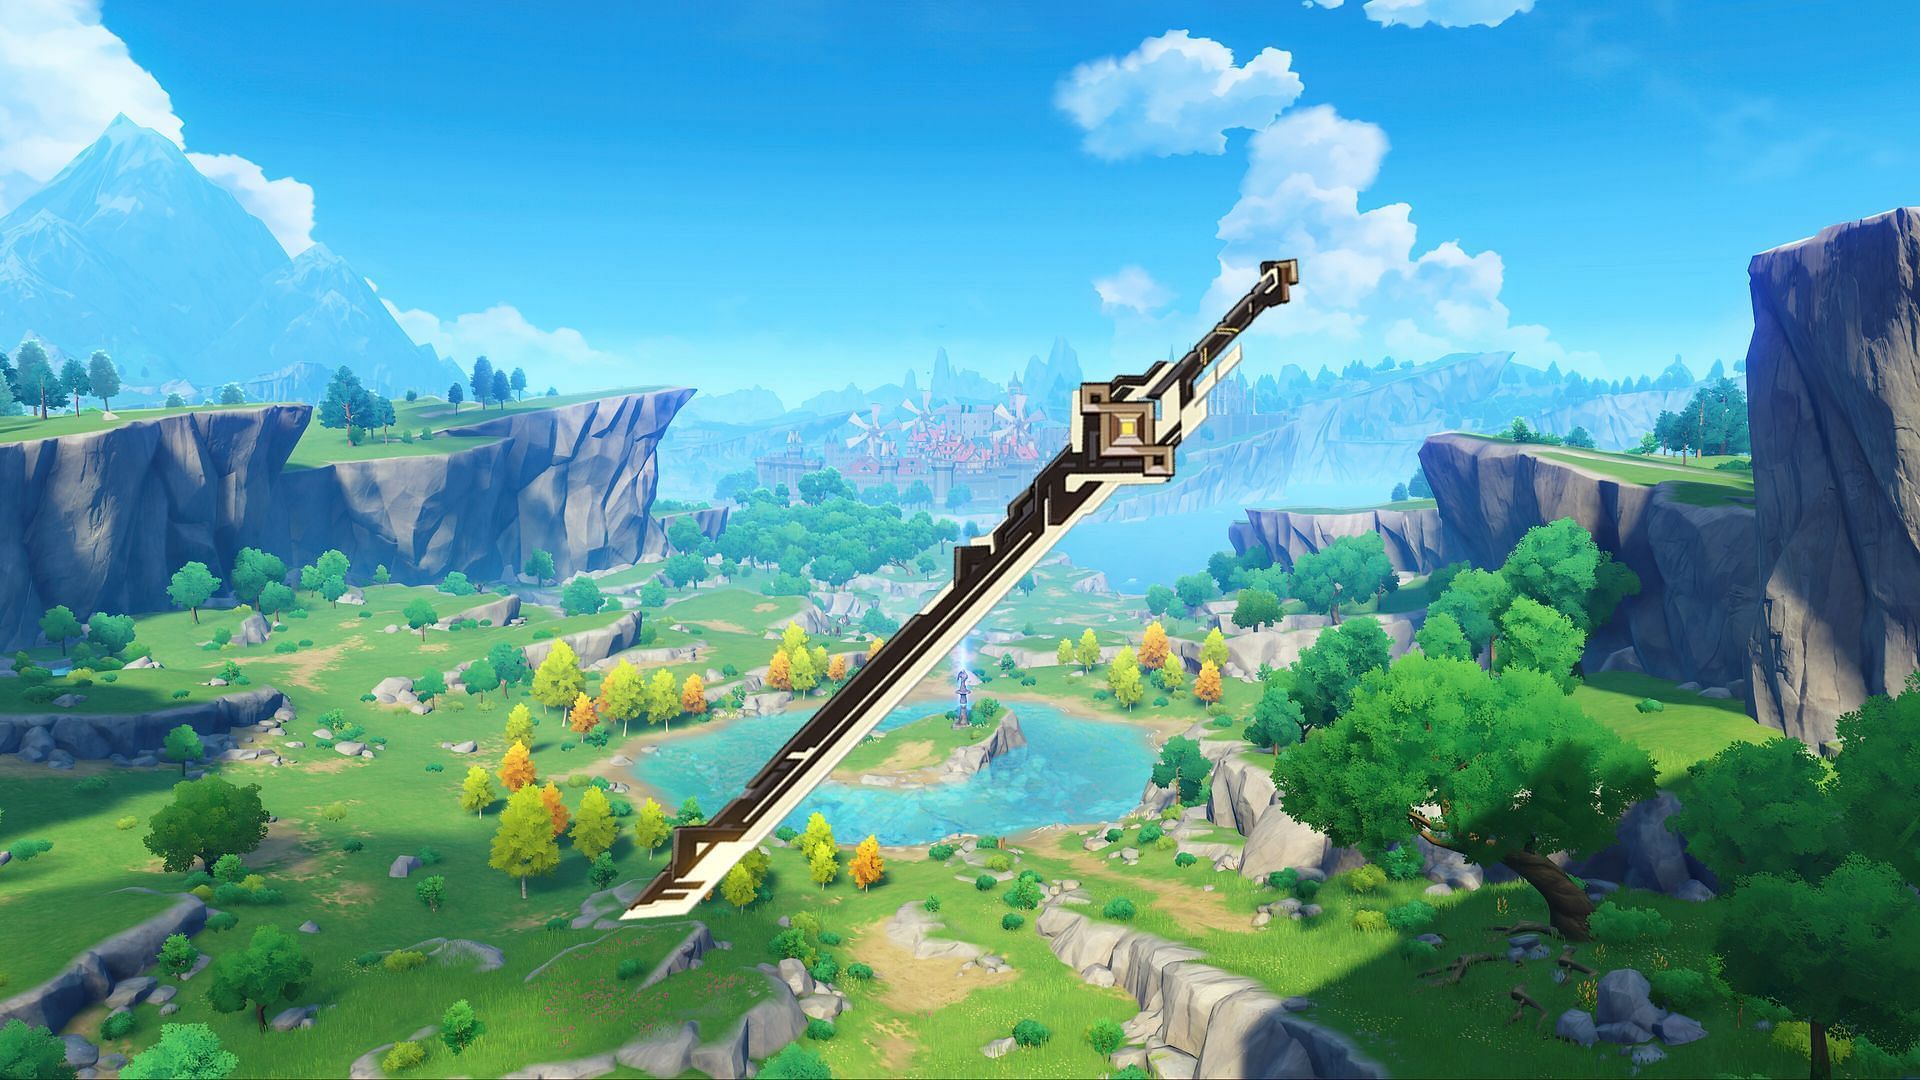 The Summit Shaper is a powerful sword (Image via Genshin Impact)